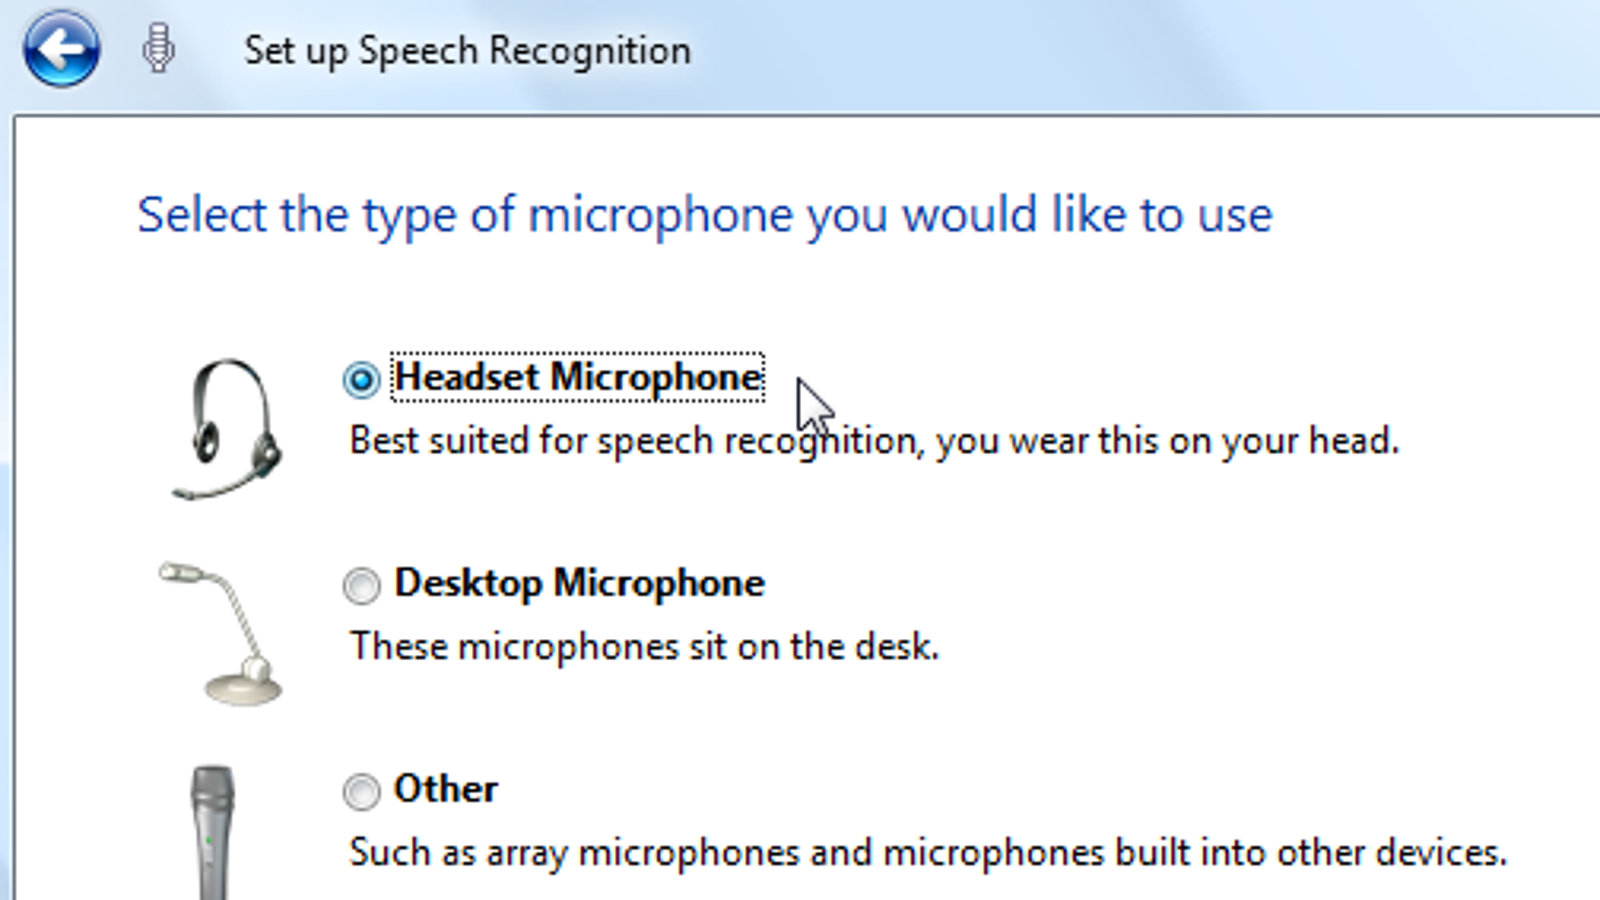 windows 8 speech to text program